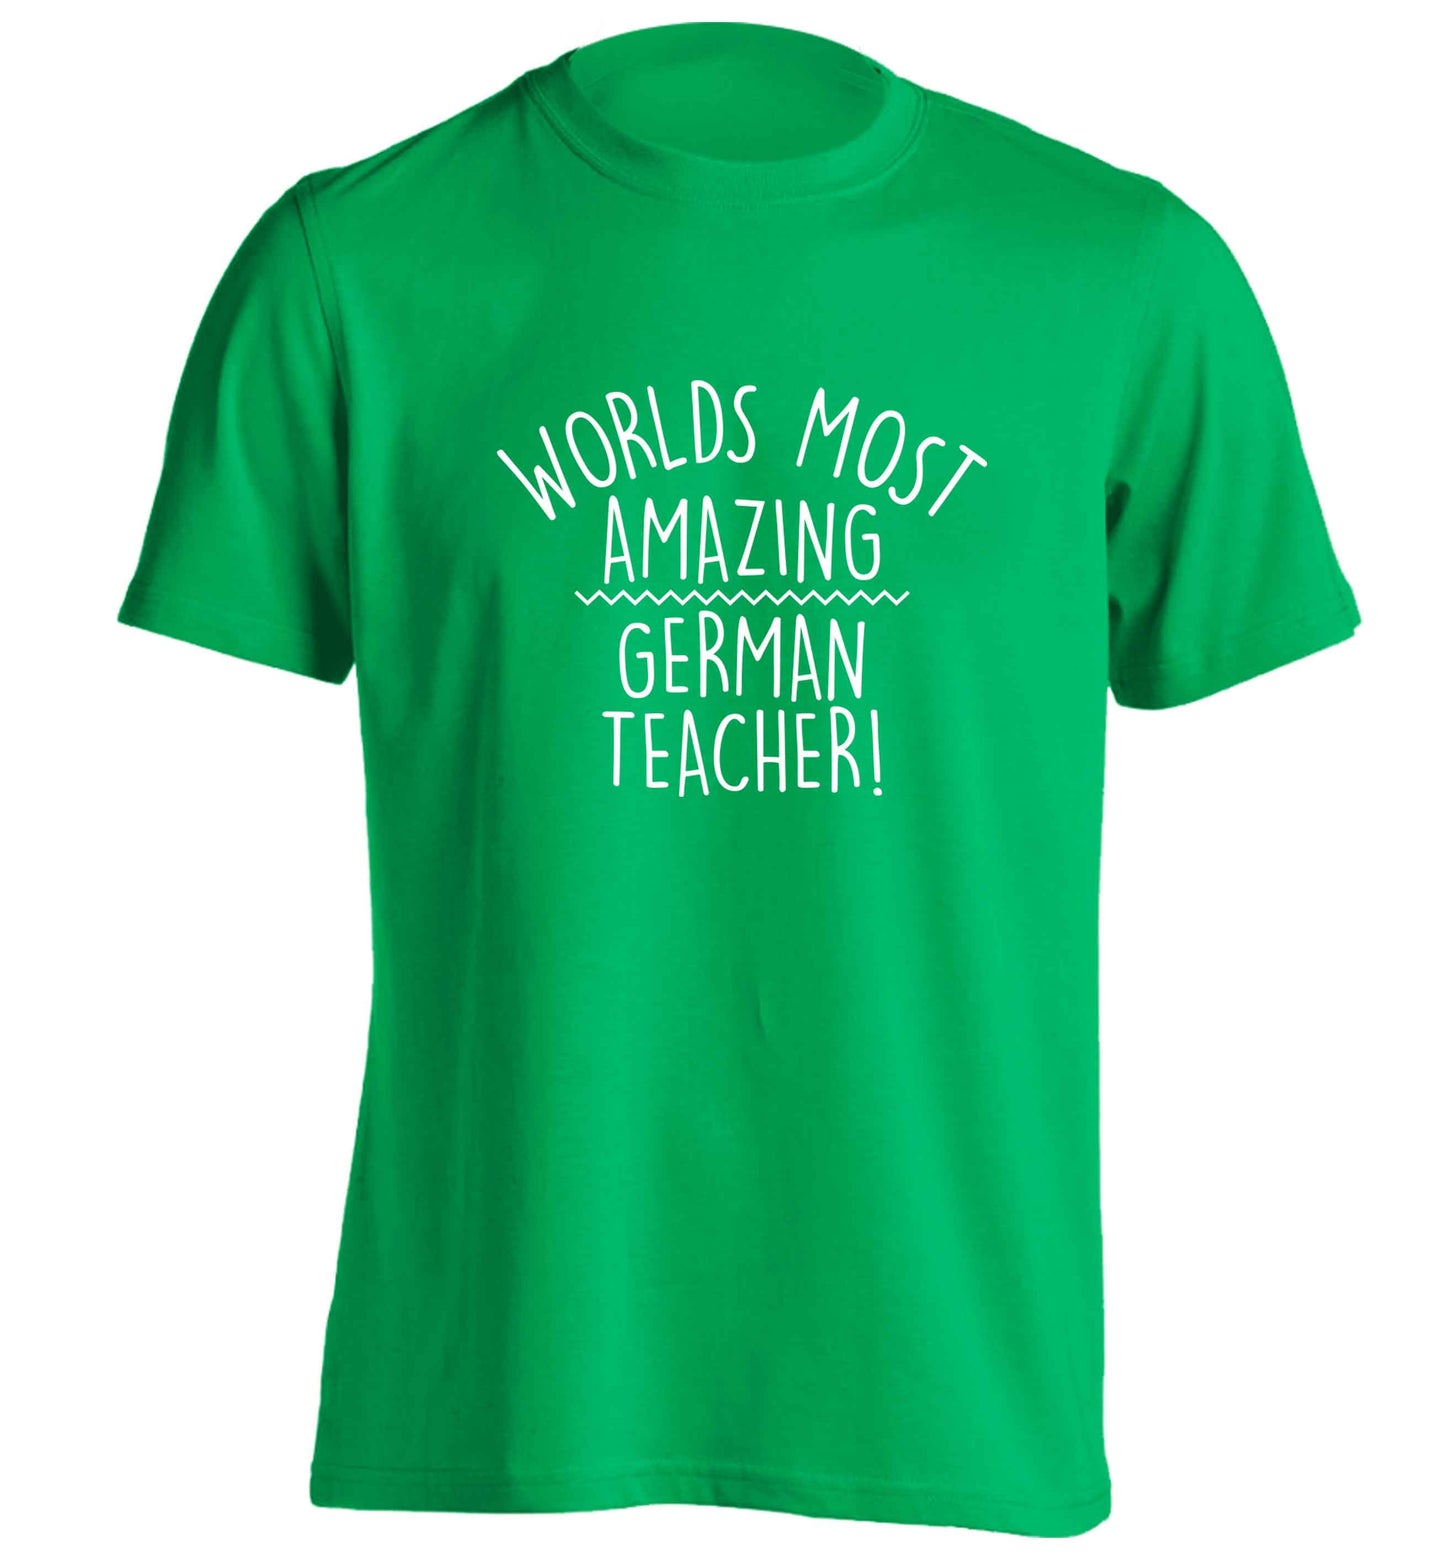 Worlds most amazing German teacher adults unisex green Tshirt 2XL